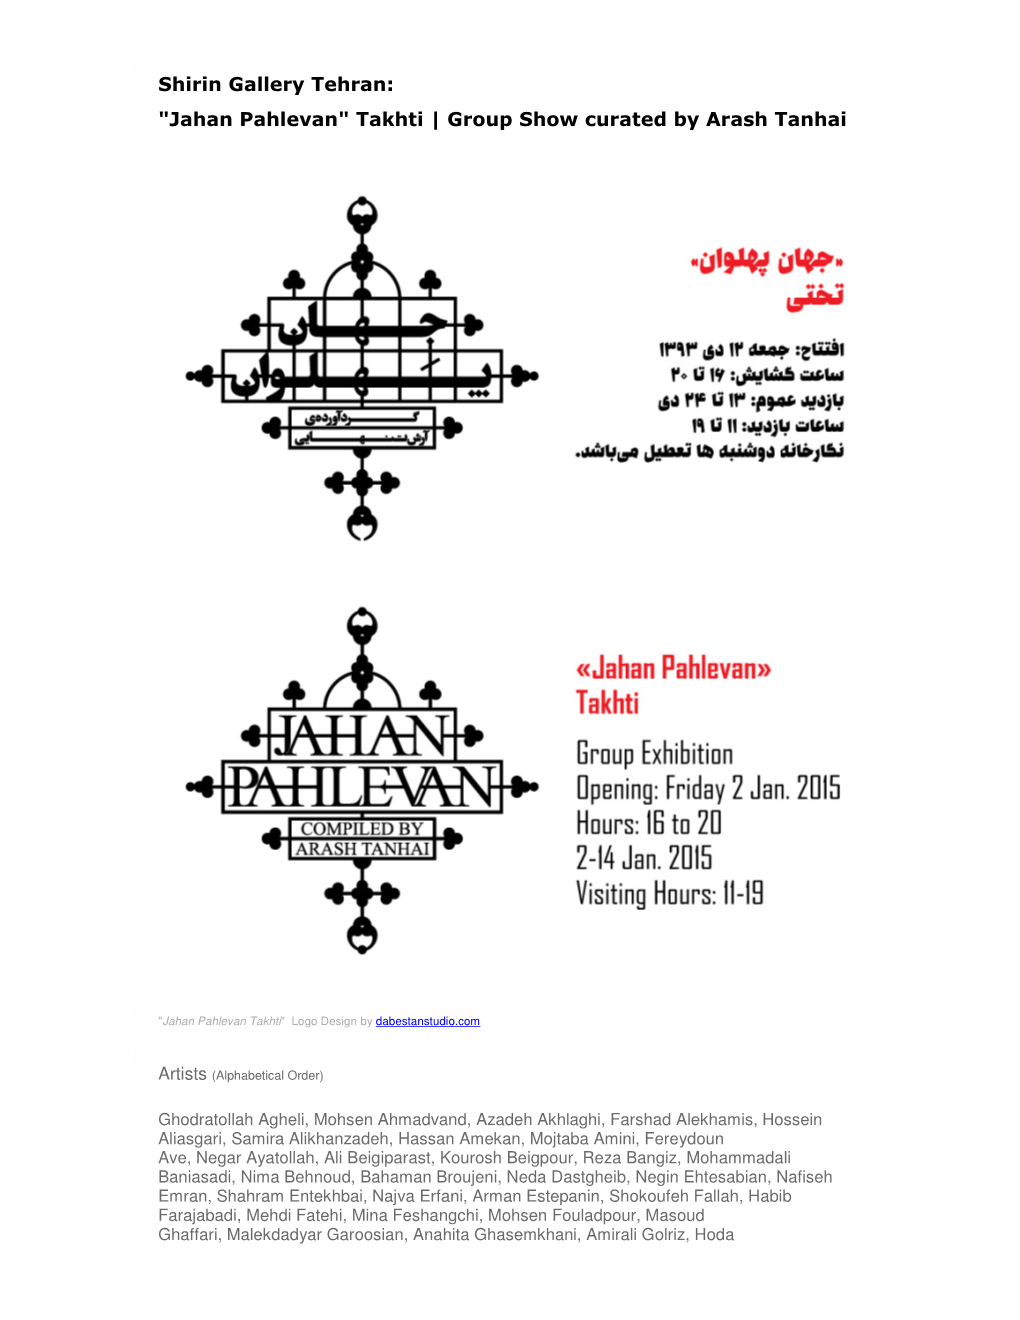 Shirin Gallery Tehran: "Jahan Pahlevan" Takhti | Group Show Curated by Arash Tanhai